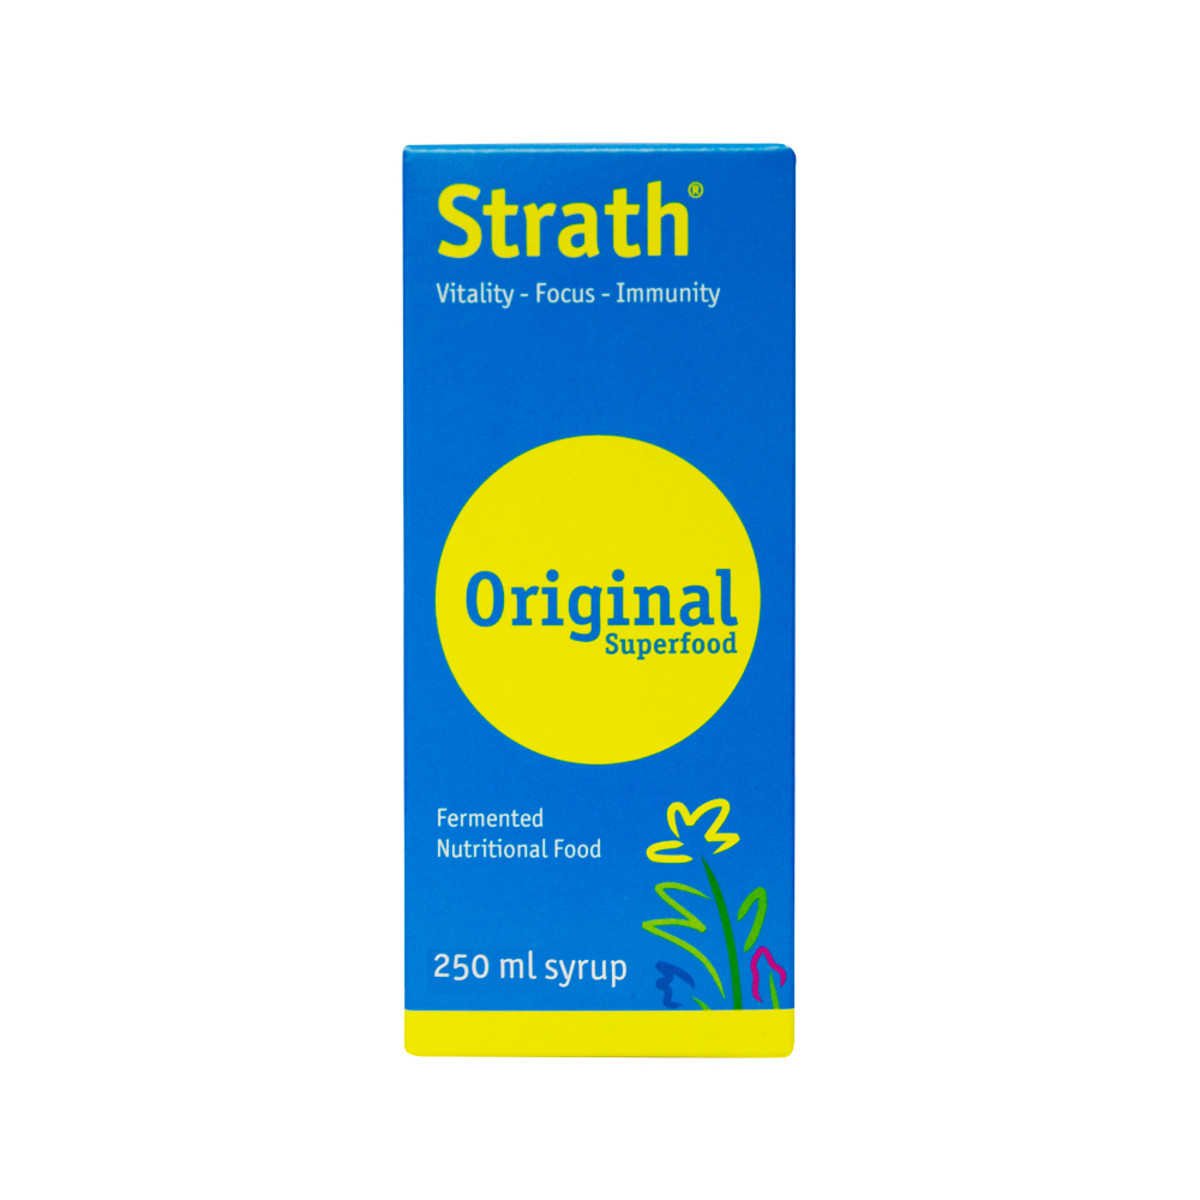 Strath Original Superfood Syrup 250ml